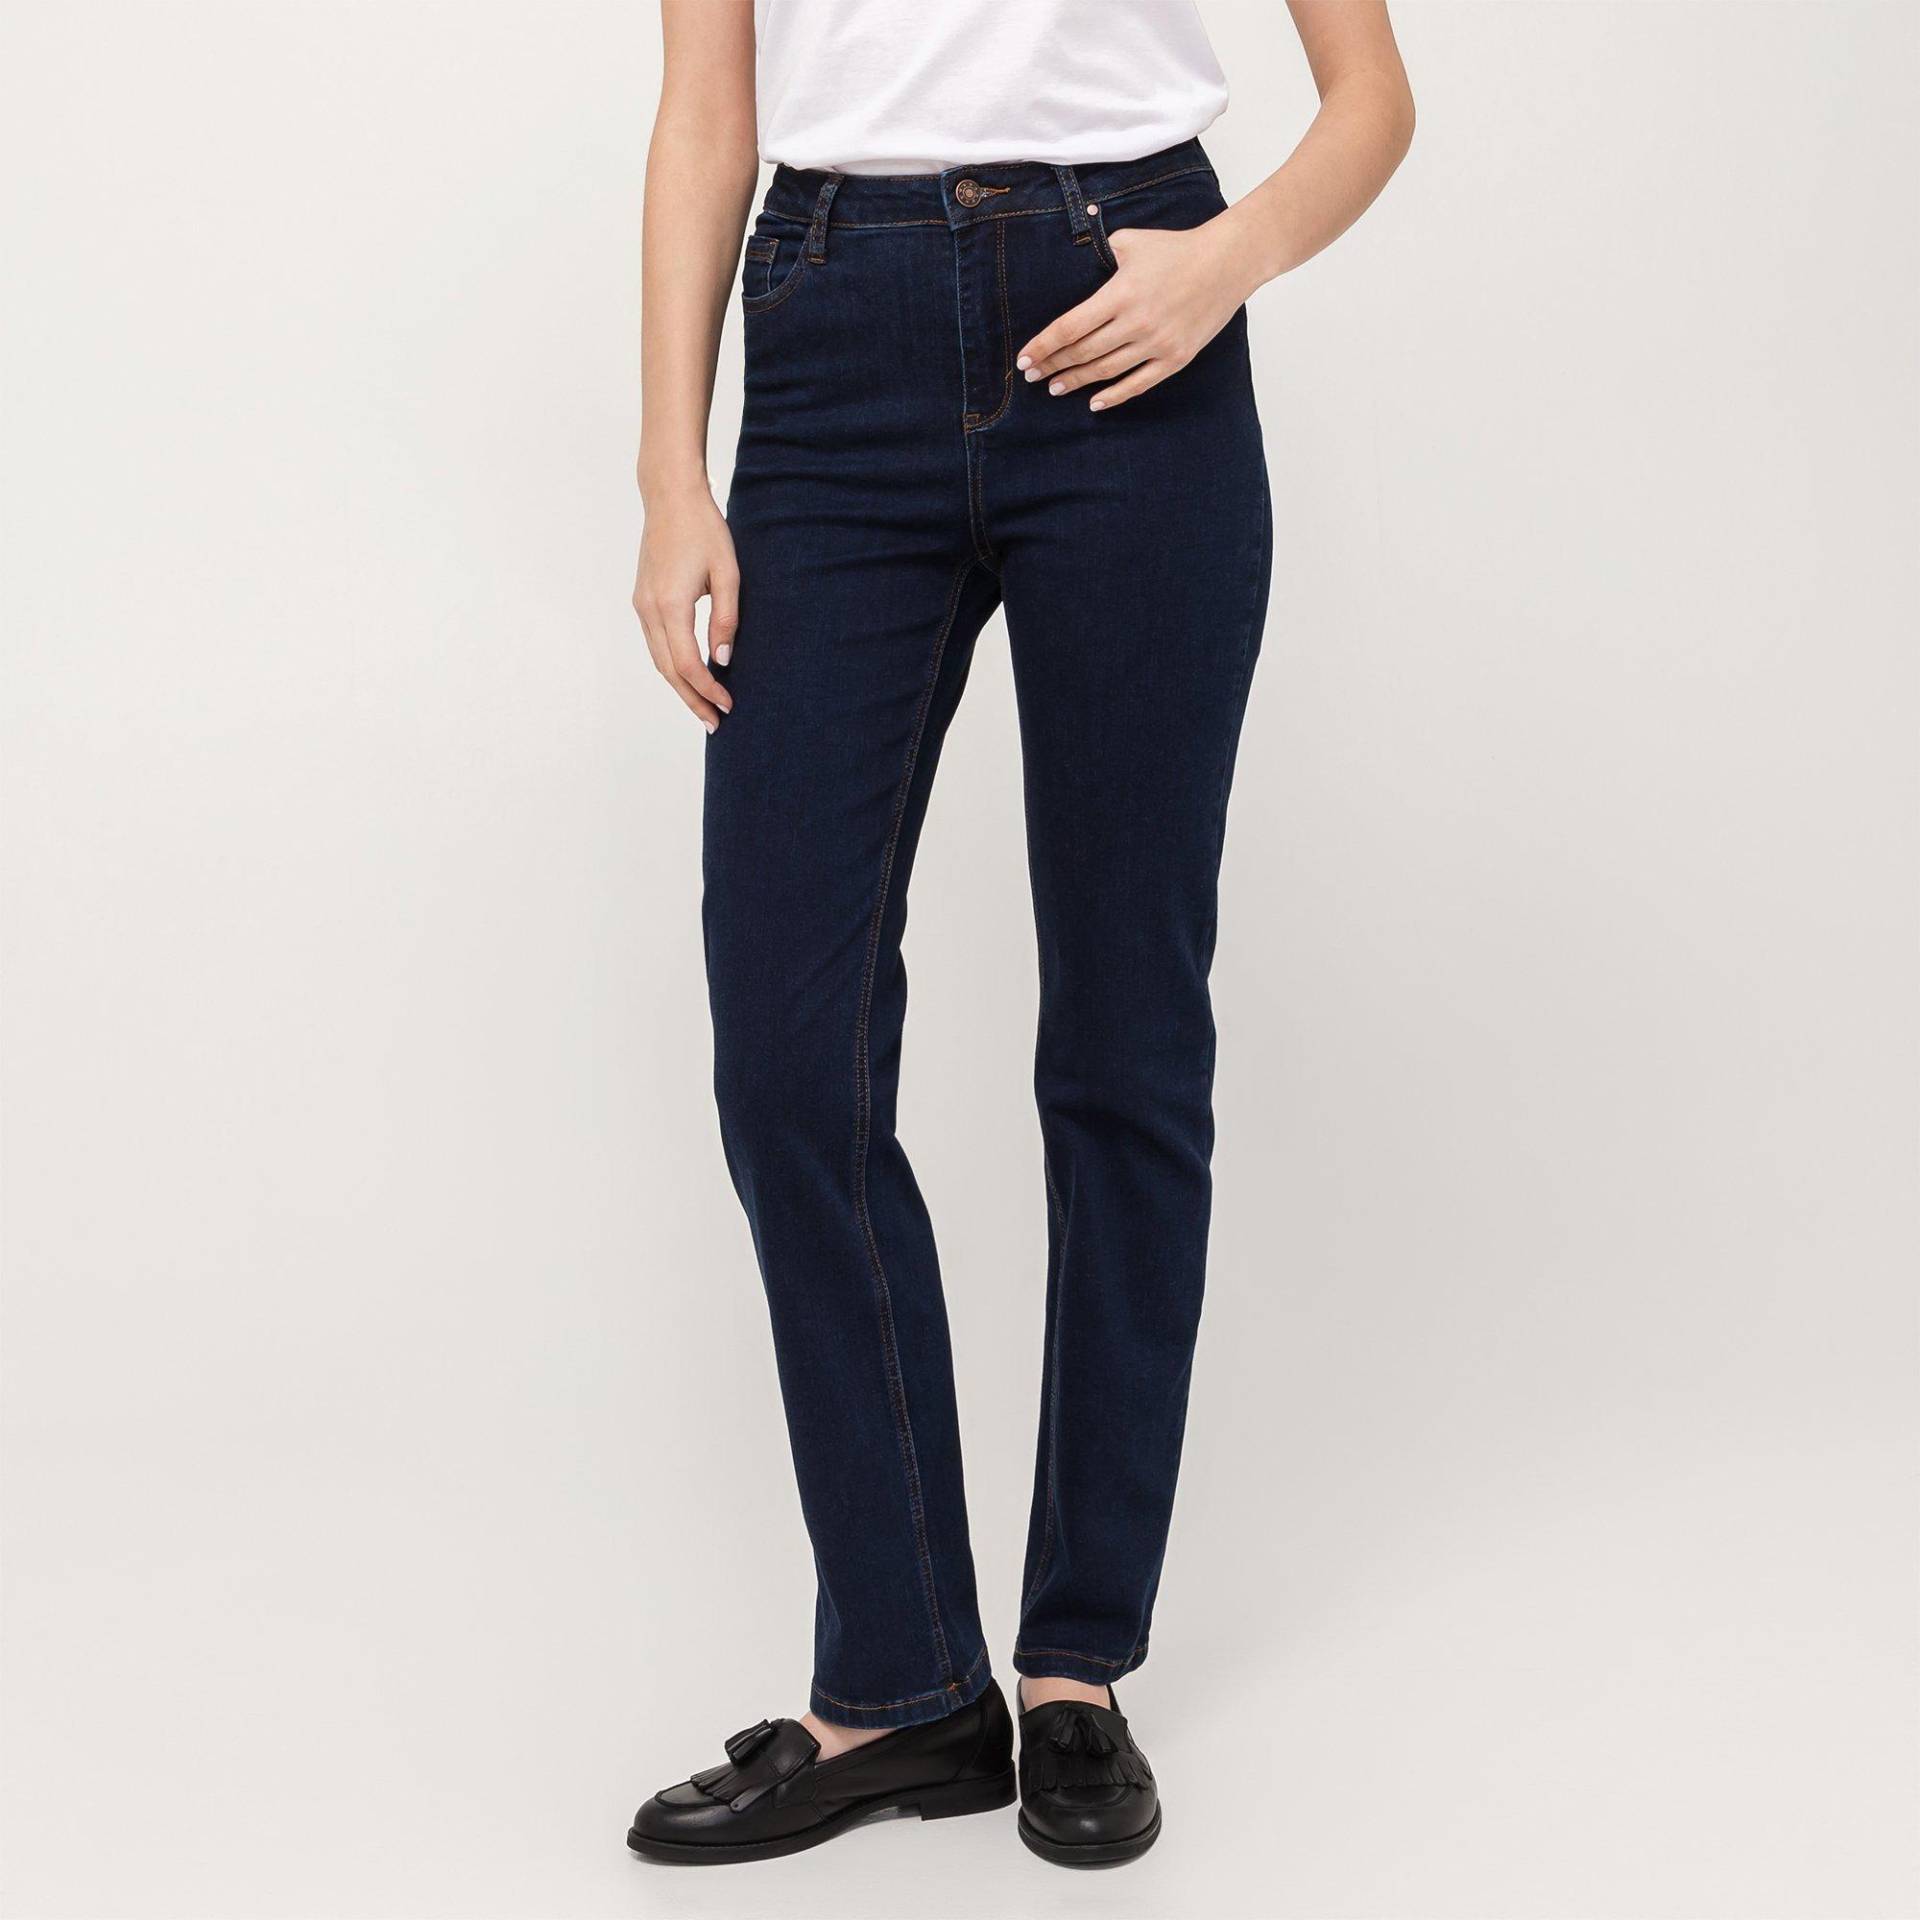 Jeans, Straight Leg Fit Damen Blau Denim Dunkel L32/W44 von Manor Woman